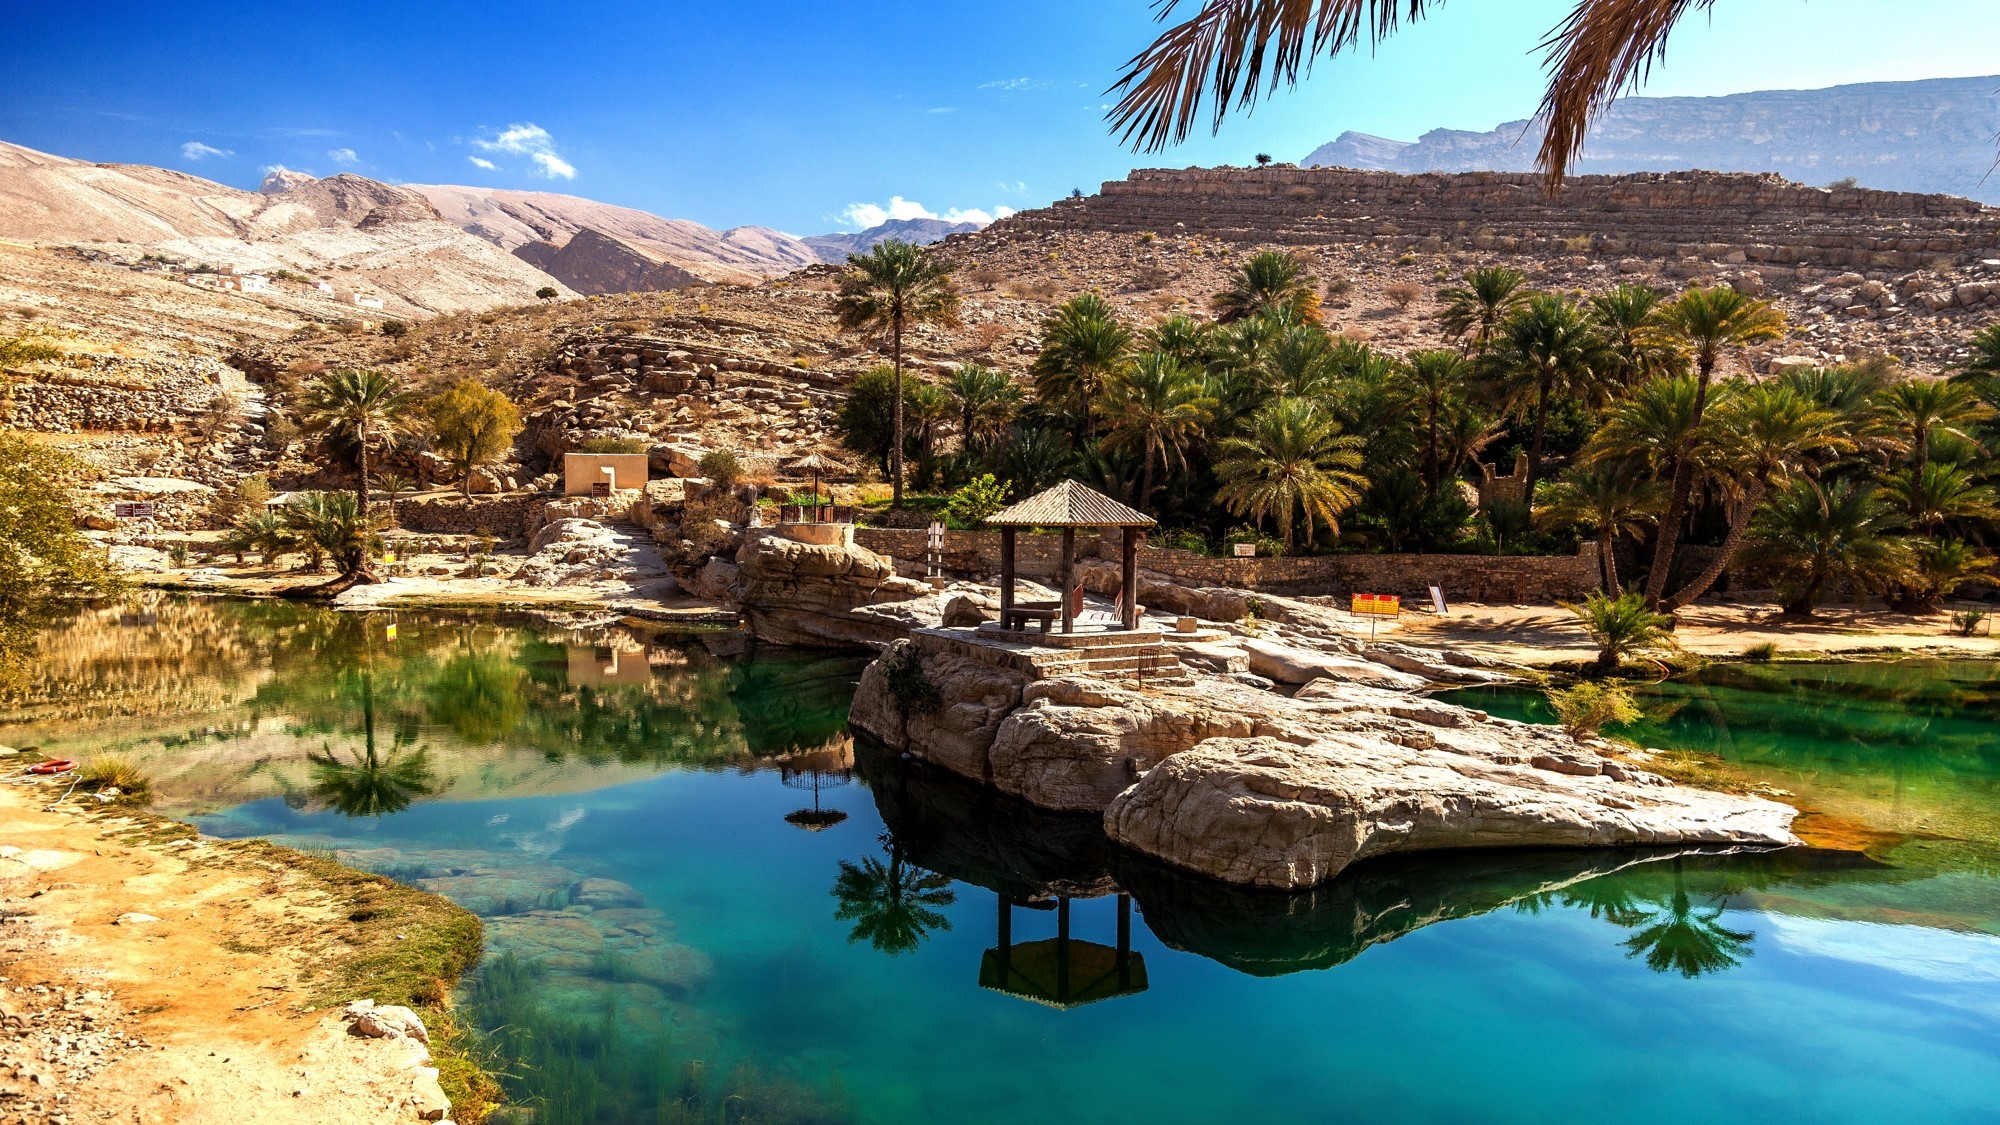 The greenest wadi in Oman, Wadi Bani Khalid